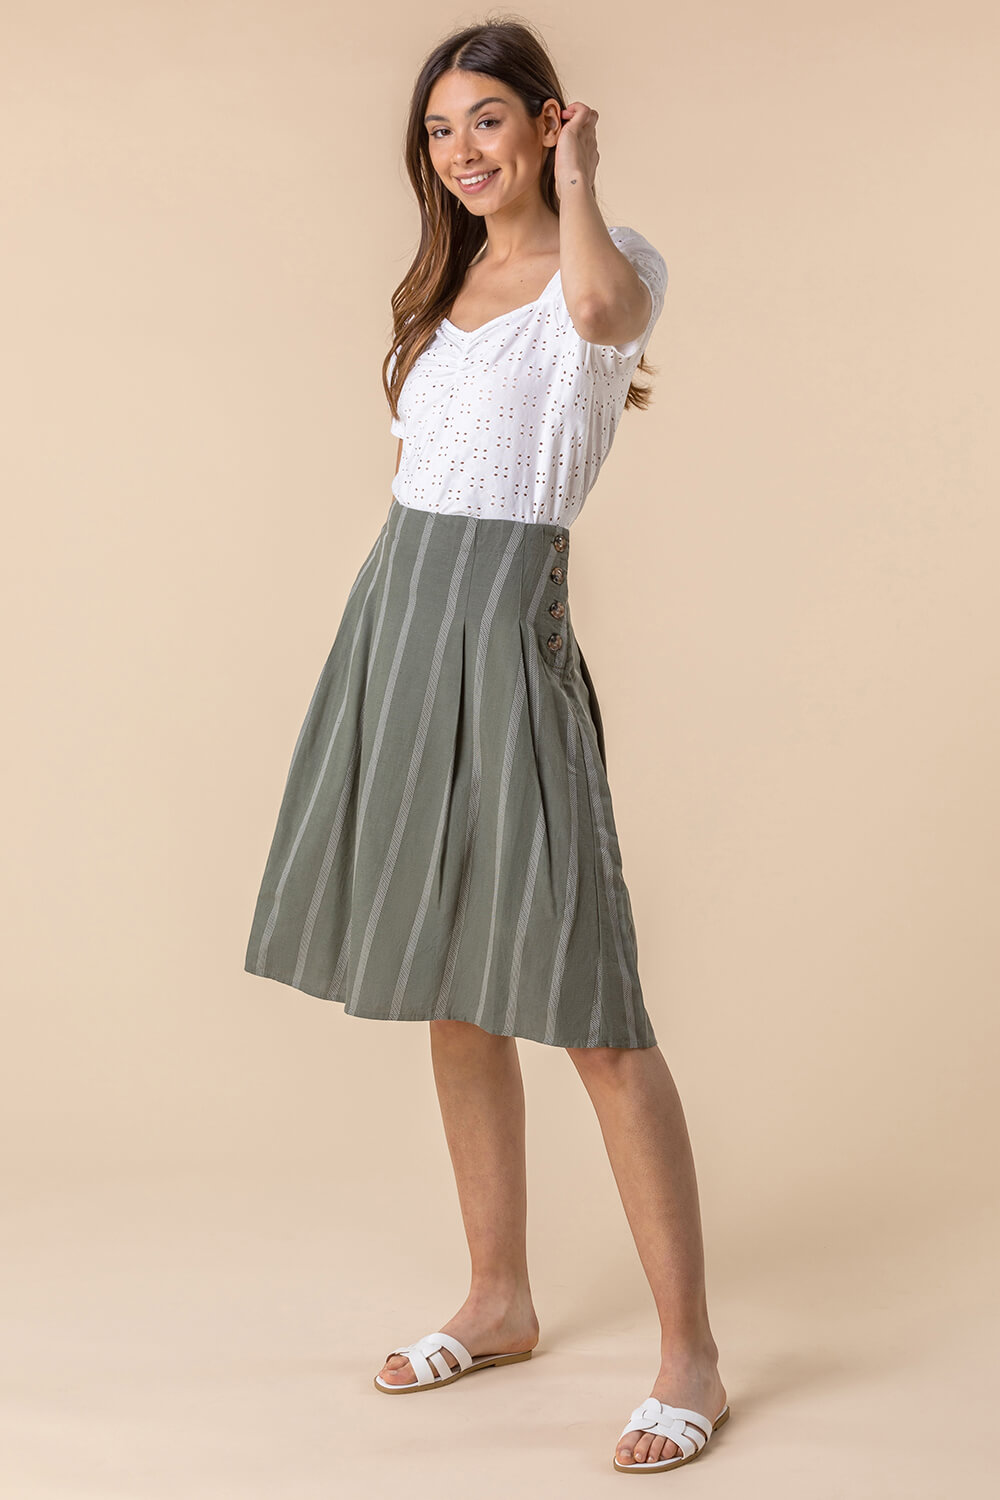 KHAKI Stripe Print Button A-Line Skirt, Image 4 of 4